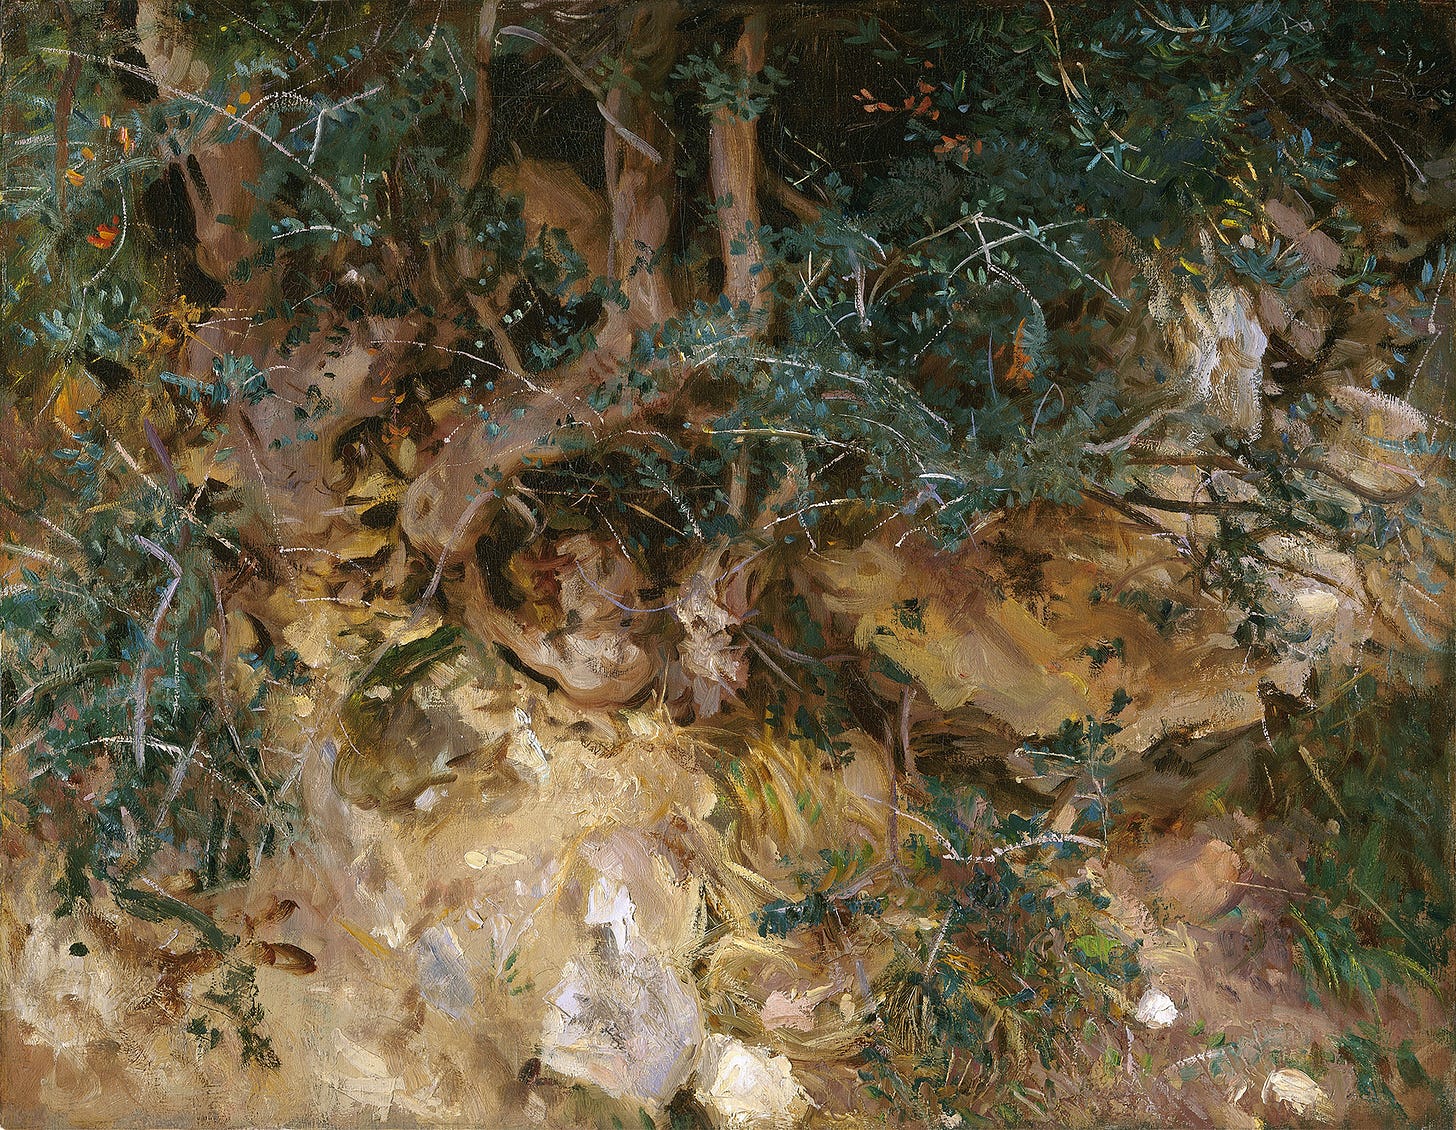 Valdemosa,Majorca – Thistles and Herbage on a Hillside (1908)